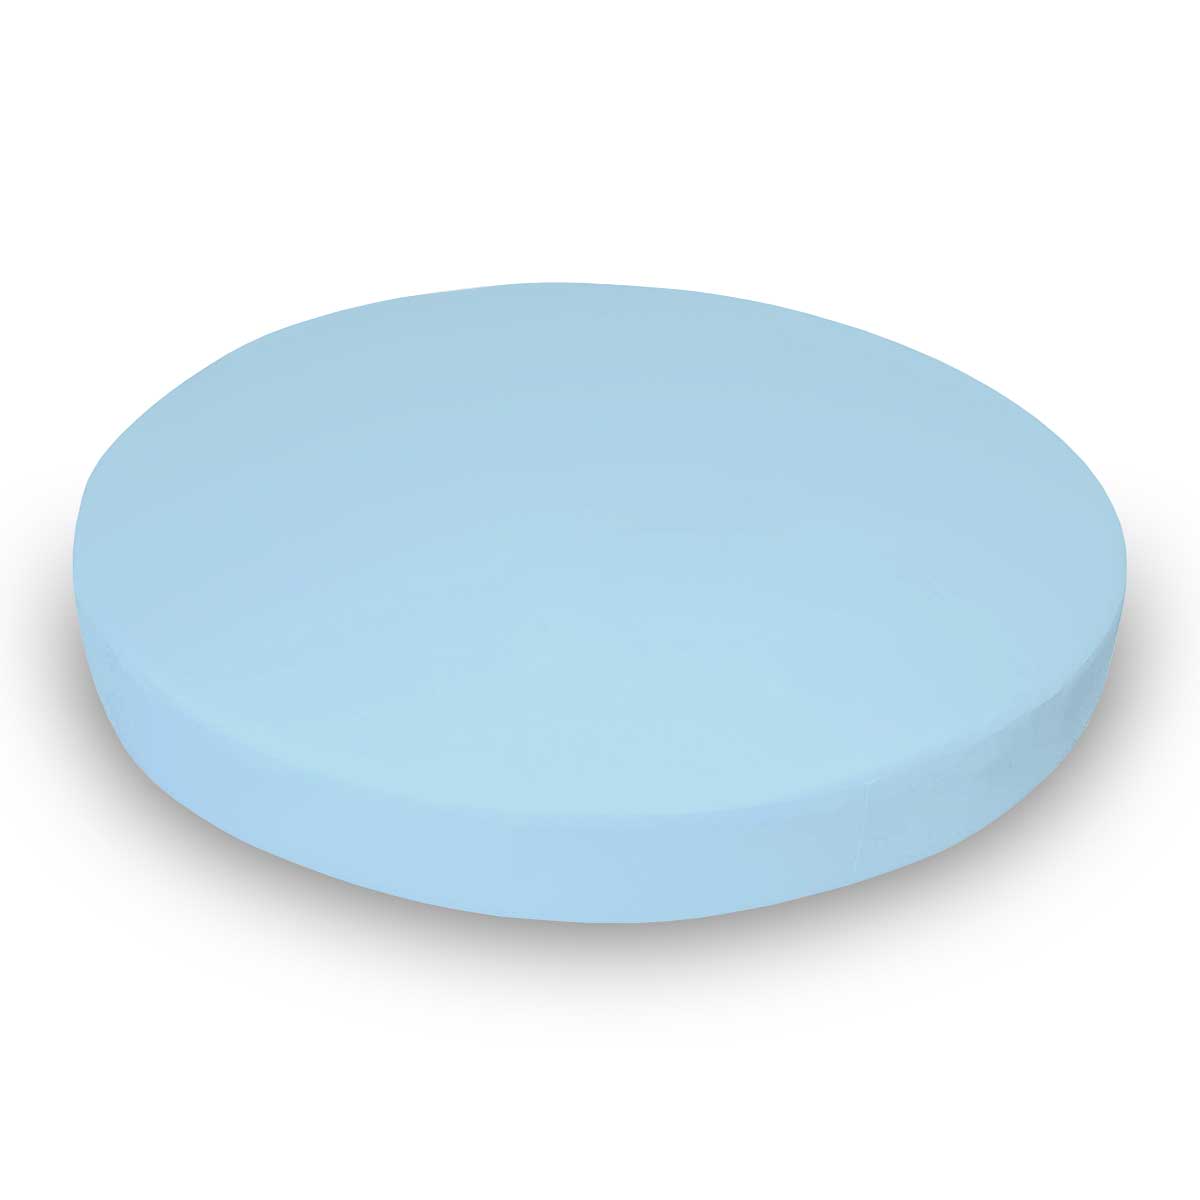 Oval (Stokke Mini) - Flannel FS9 - Aqua blue - Fitted  Oval